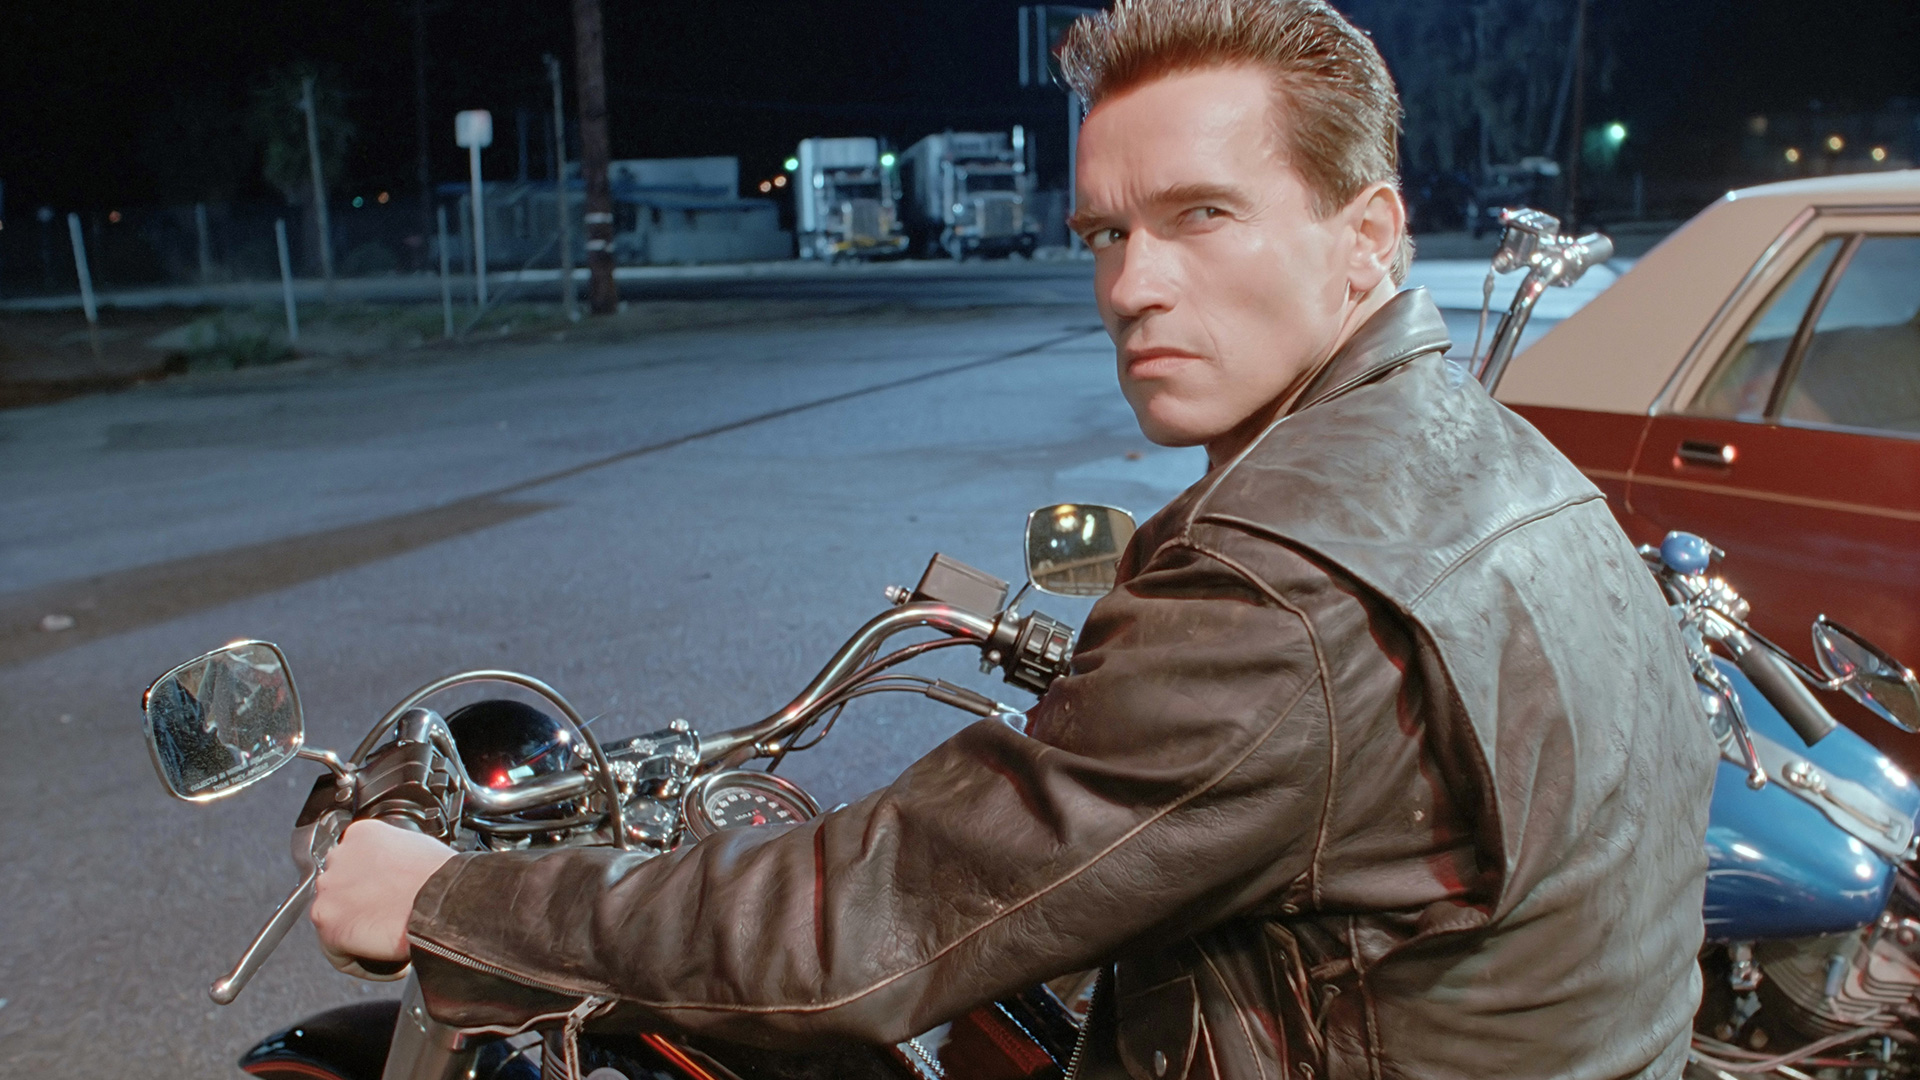 Arnold Schwarzenegger on Bike